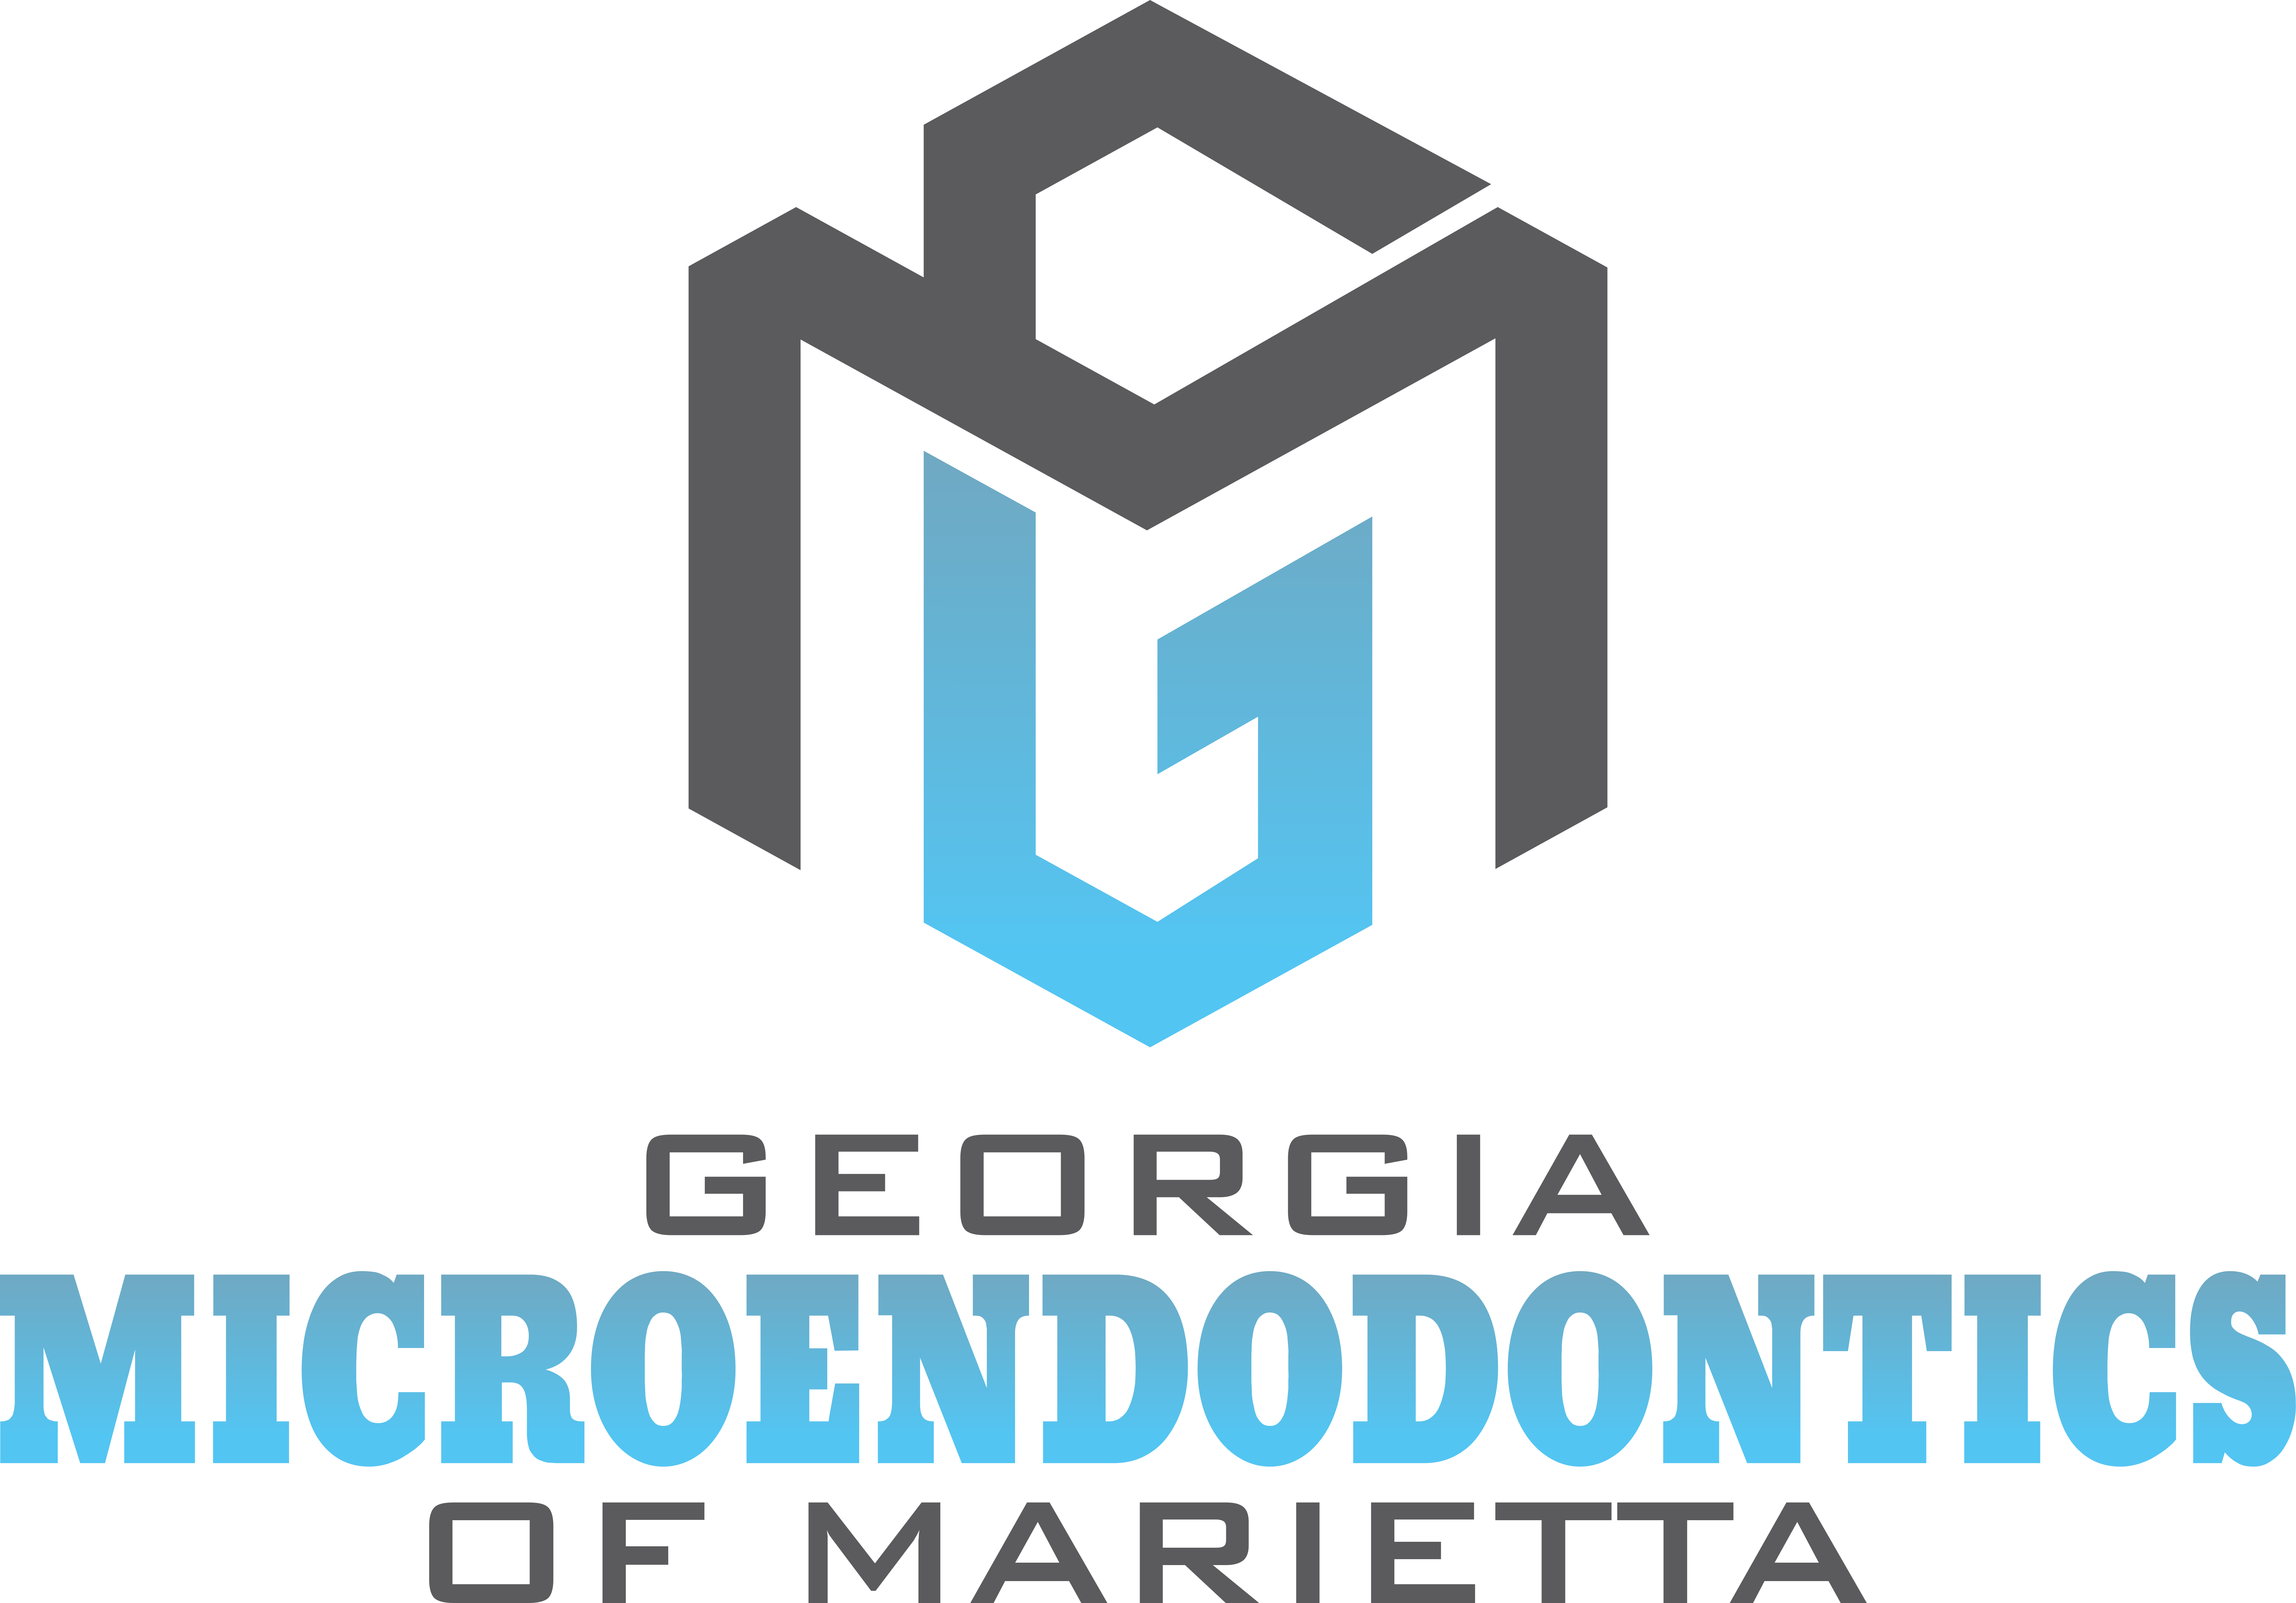 Georgia Microendodontics